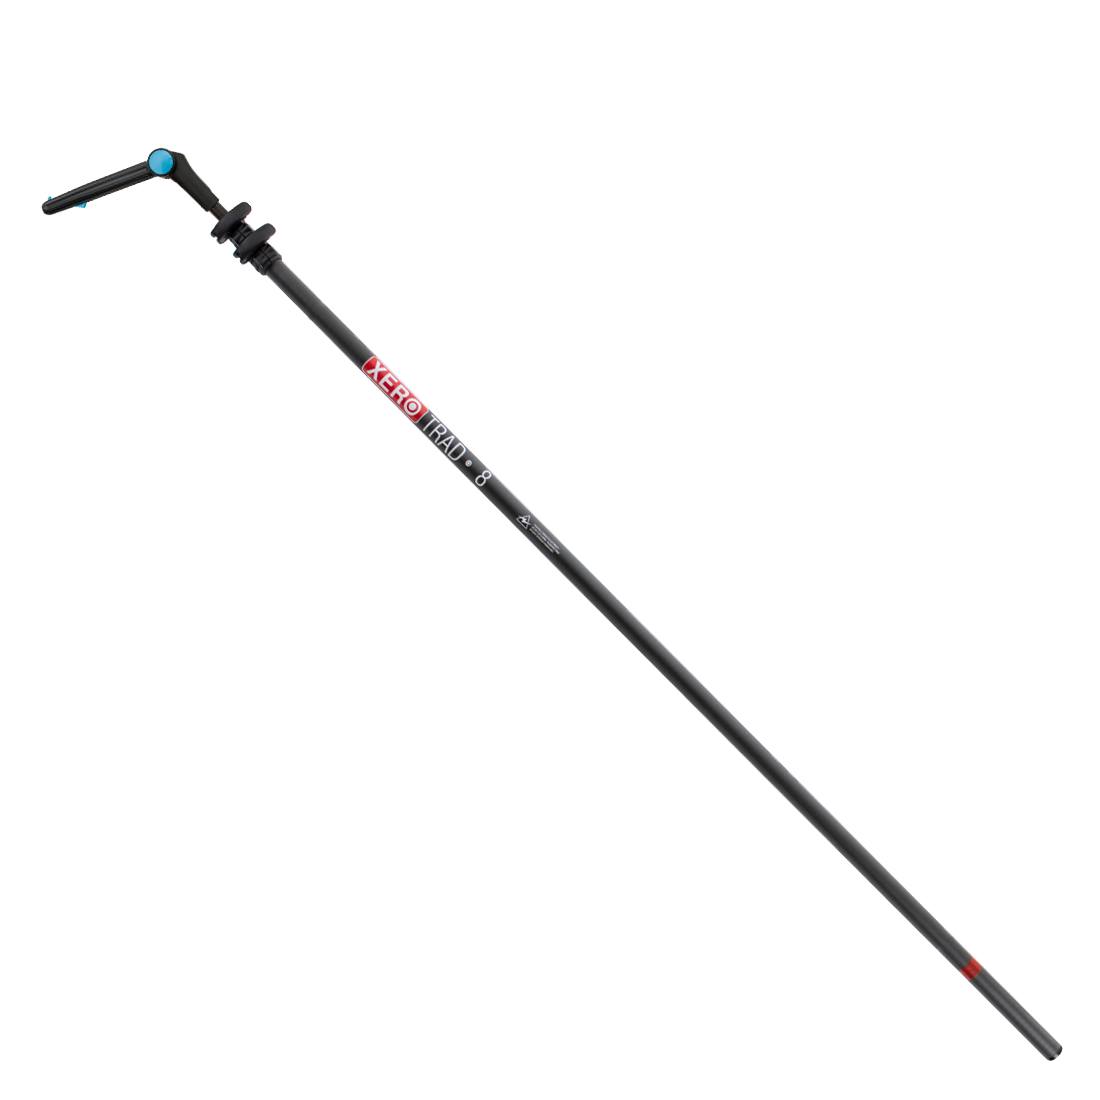 XERO Carbon Fiber Pole - Trad Pole 2.0 - Dr Angle Tip - Black - 8 Foot - Full View